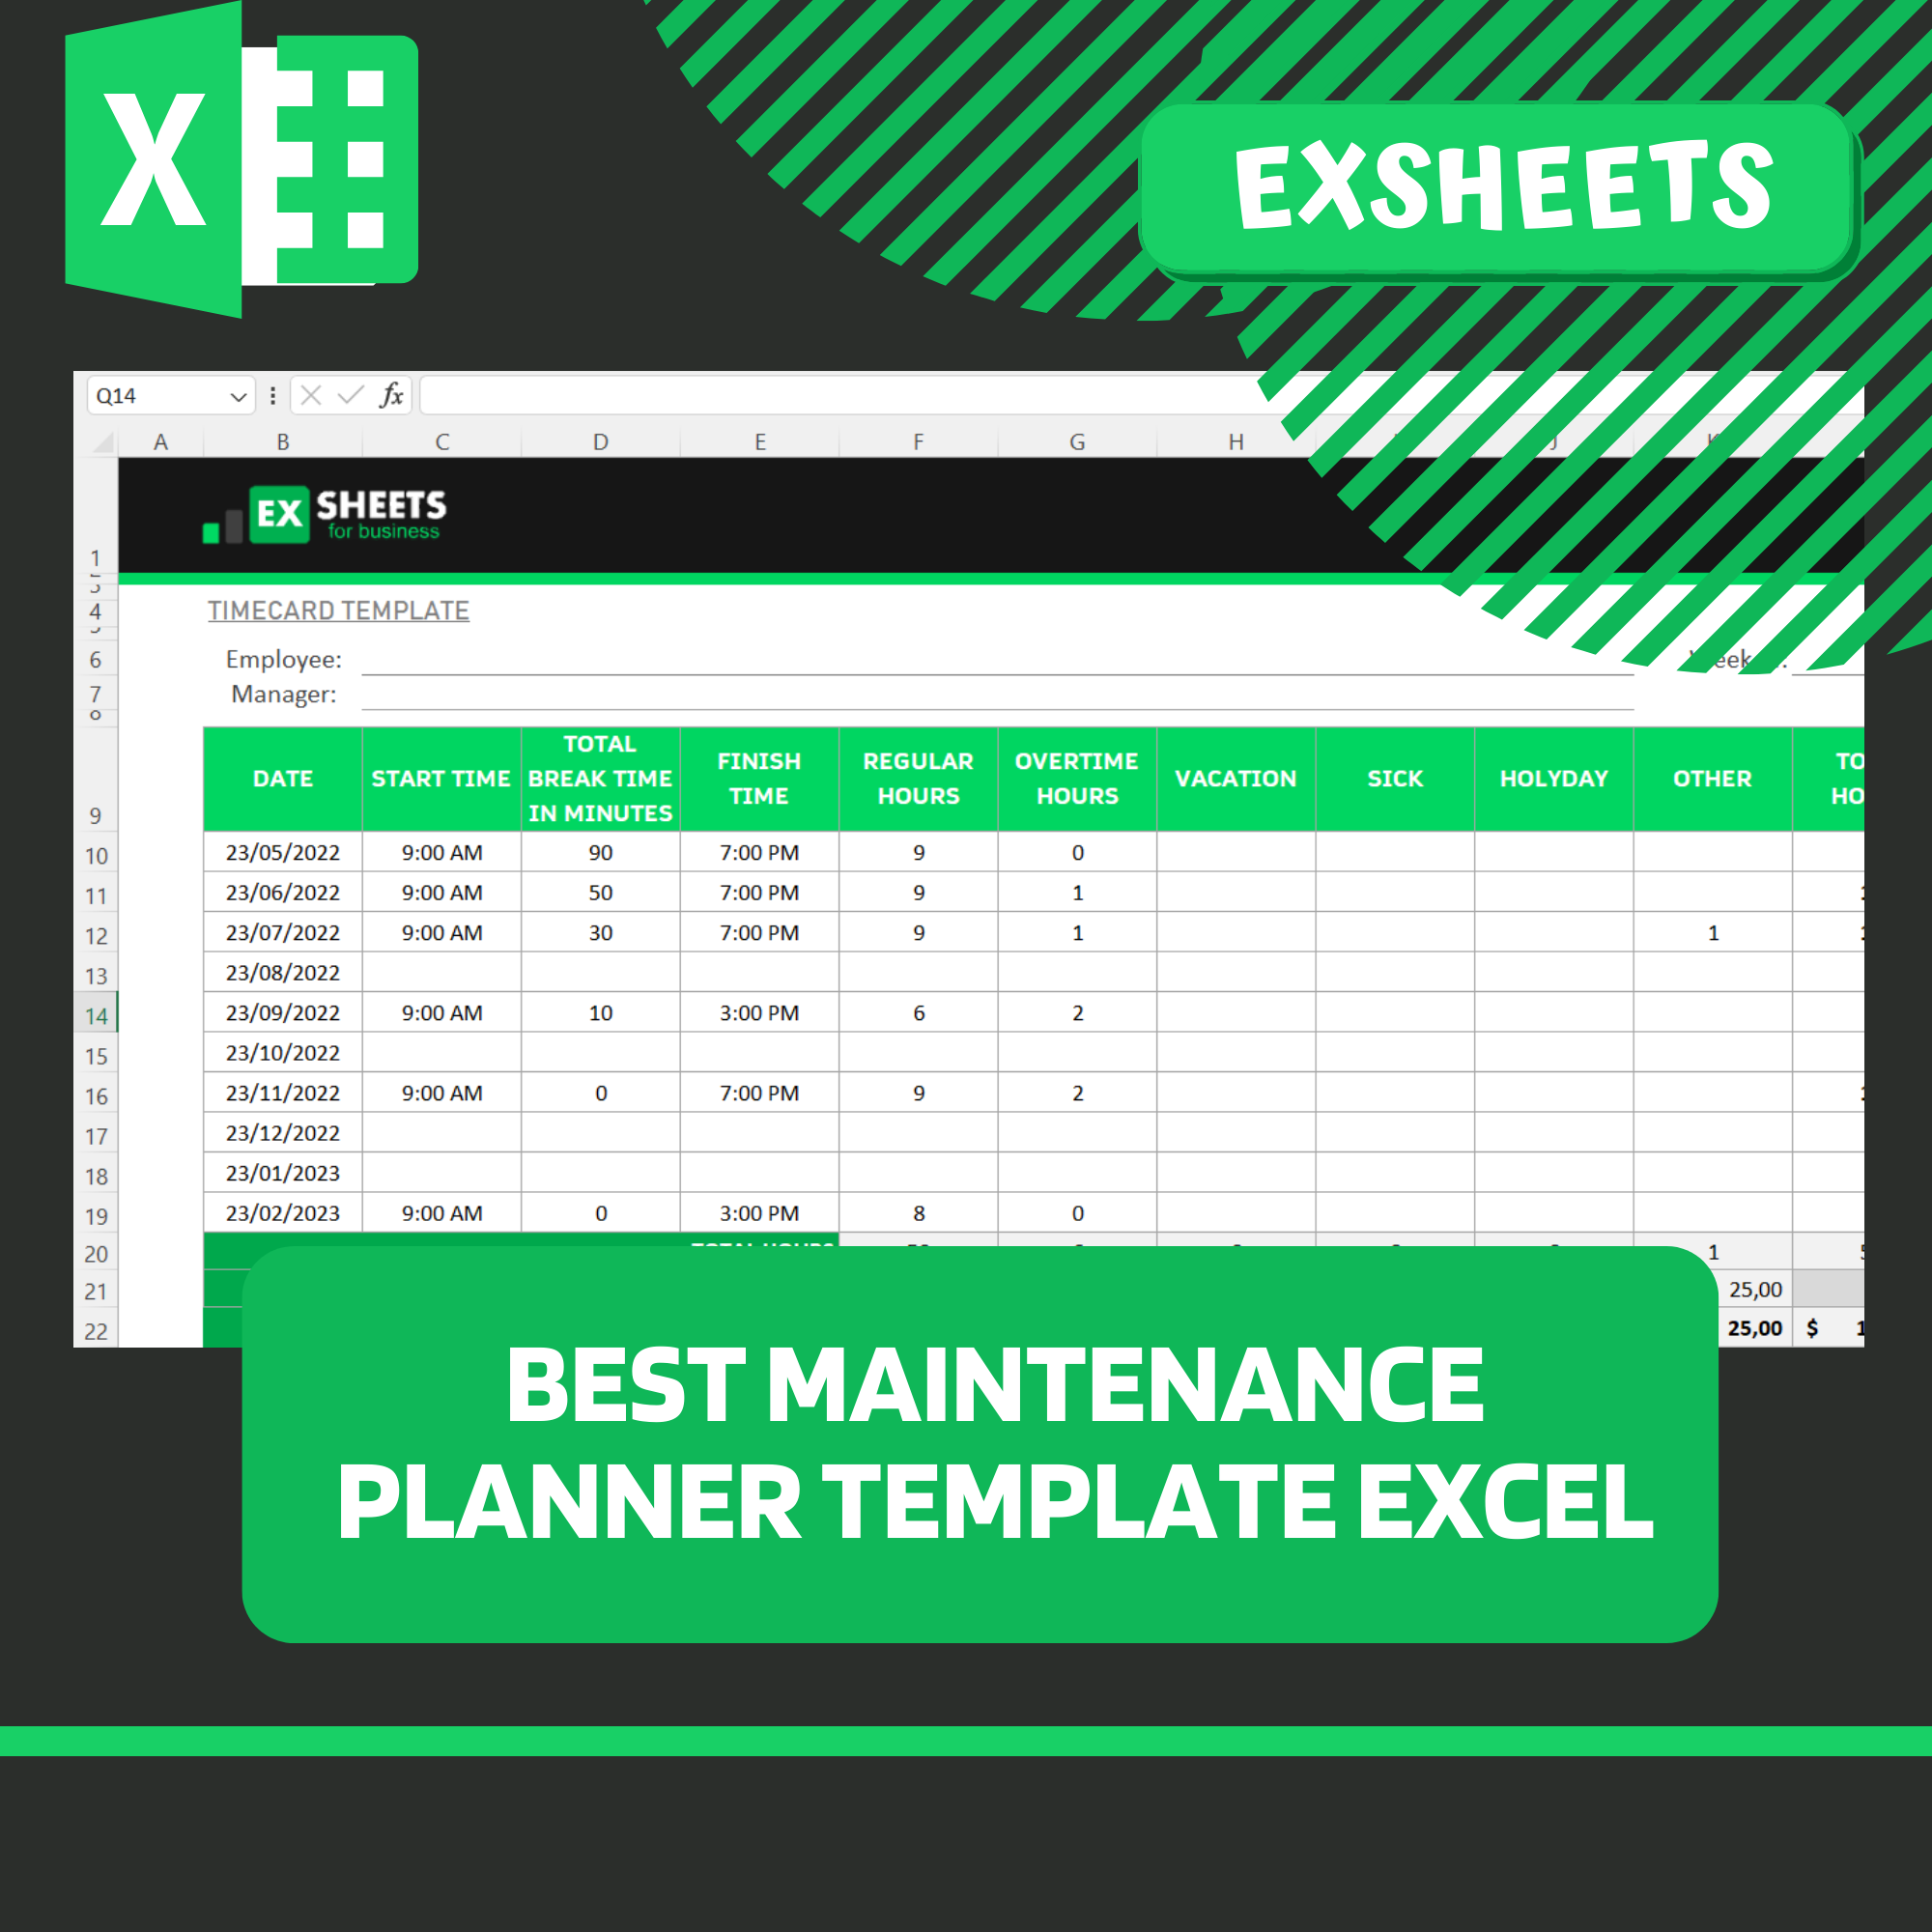 Maintenance Planner Template Excel Exsheets